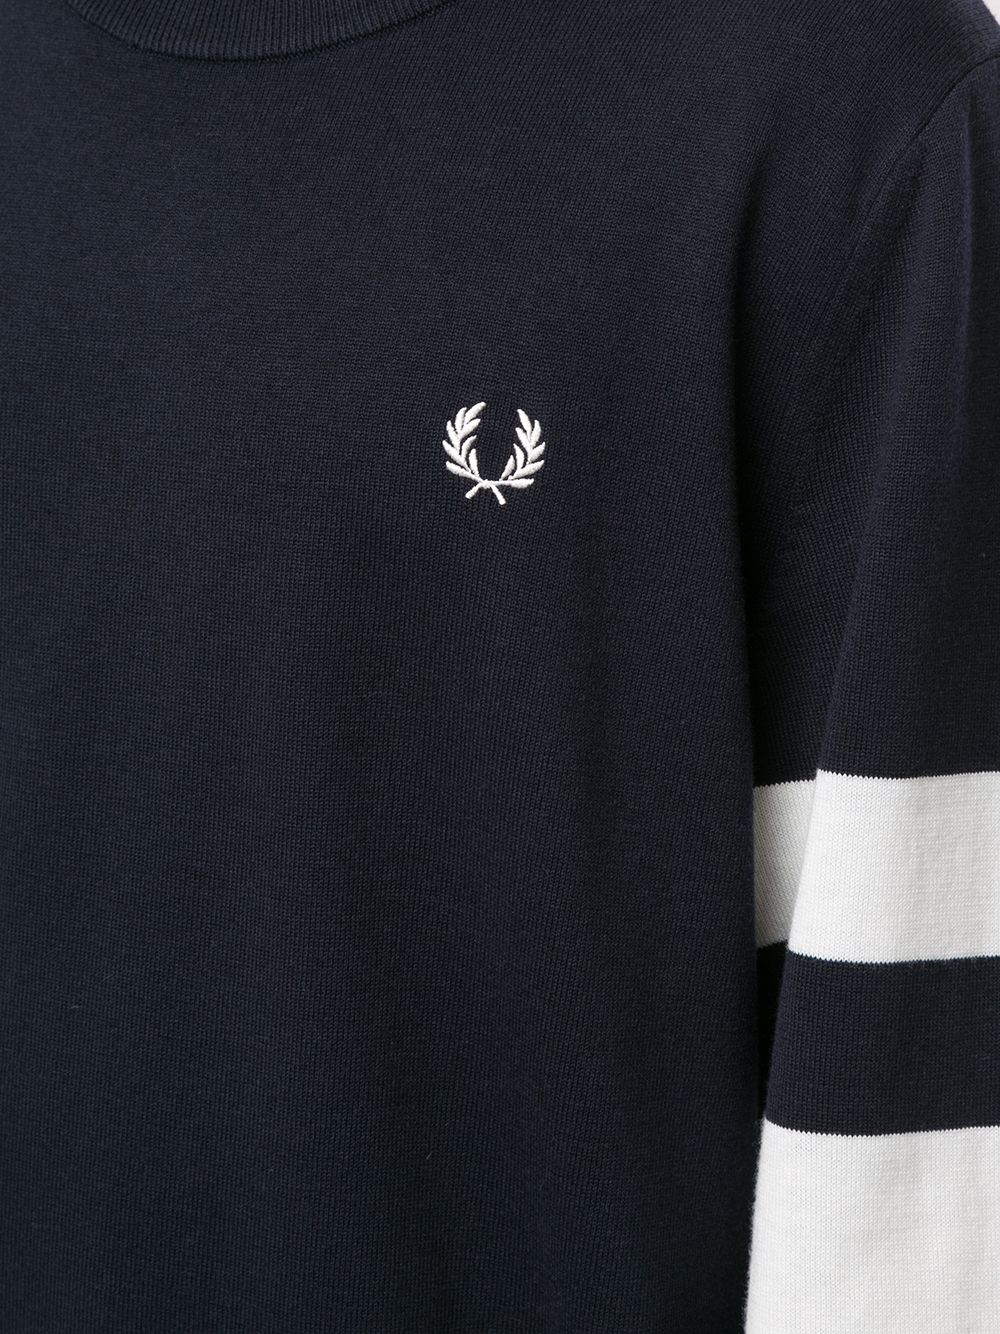 фото Fred perry пуловер с полосками и логотипом